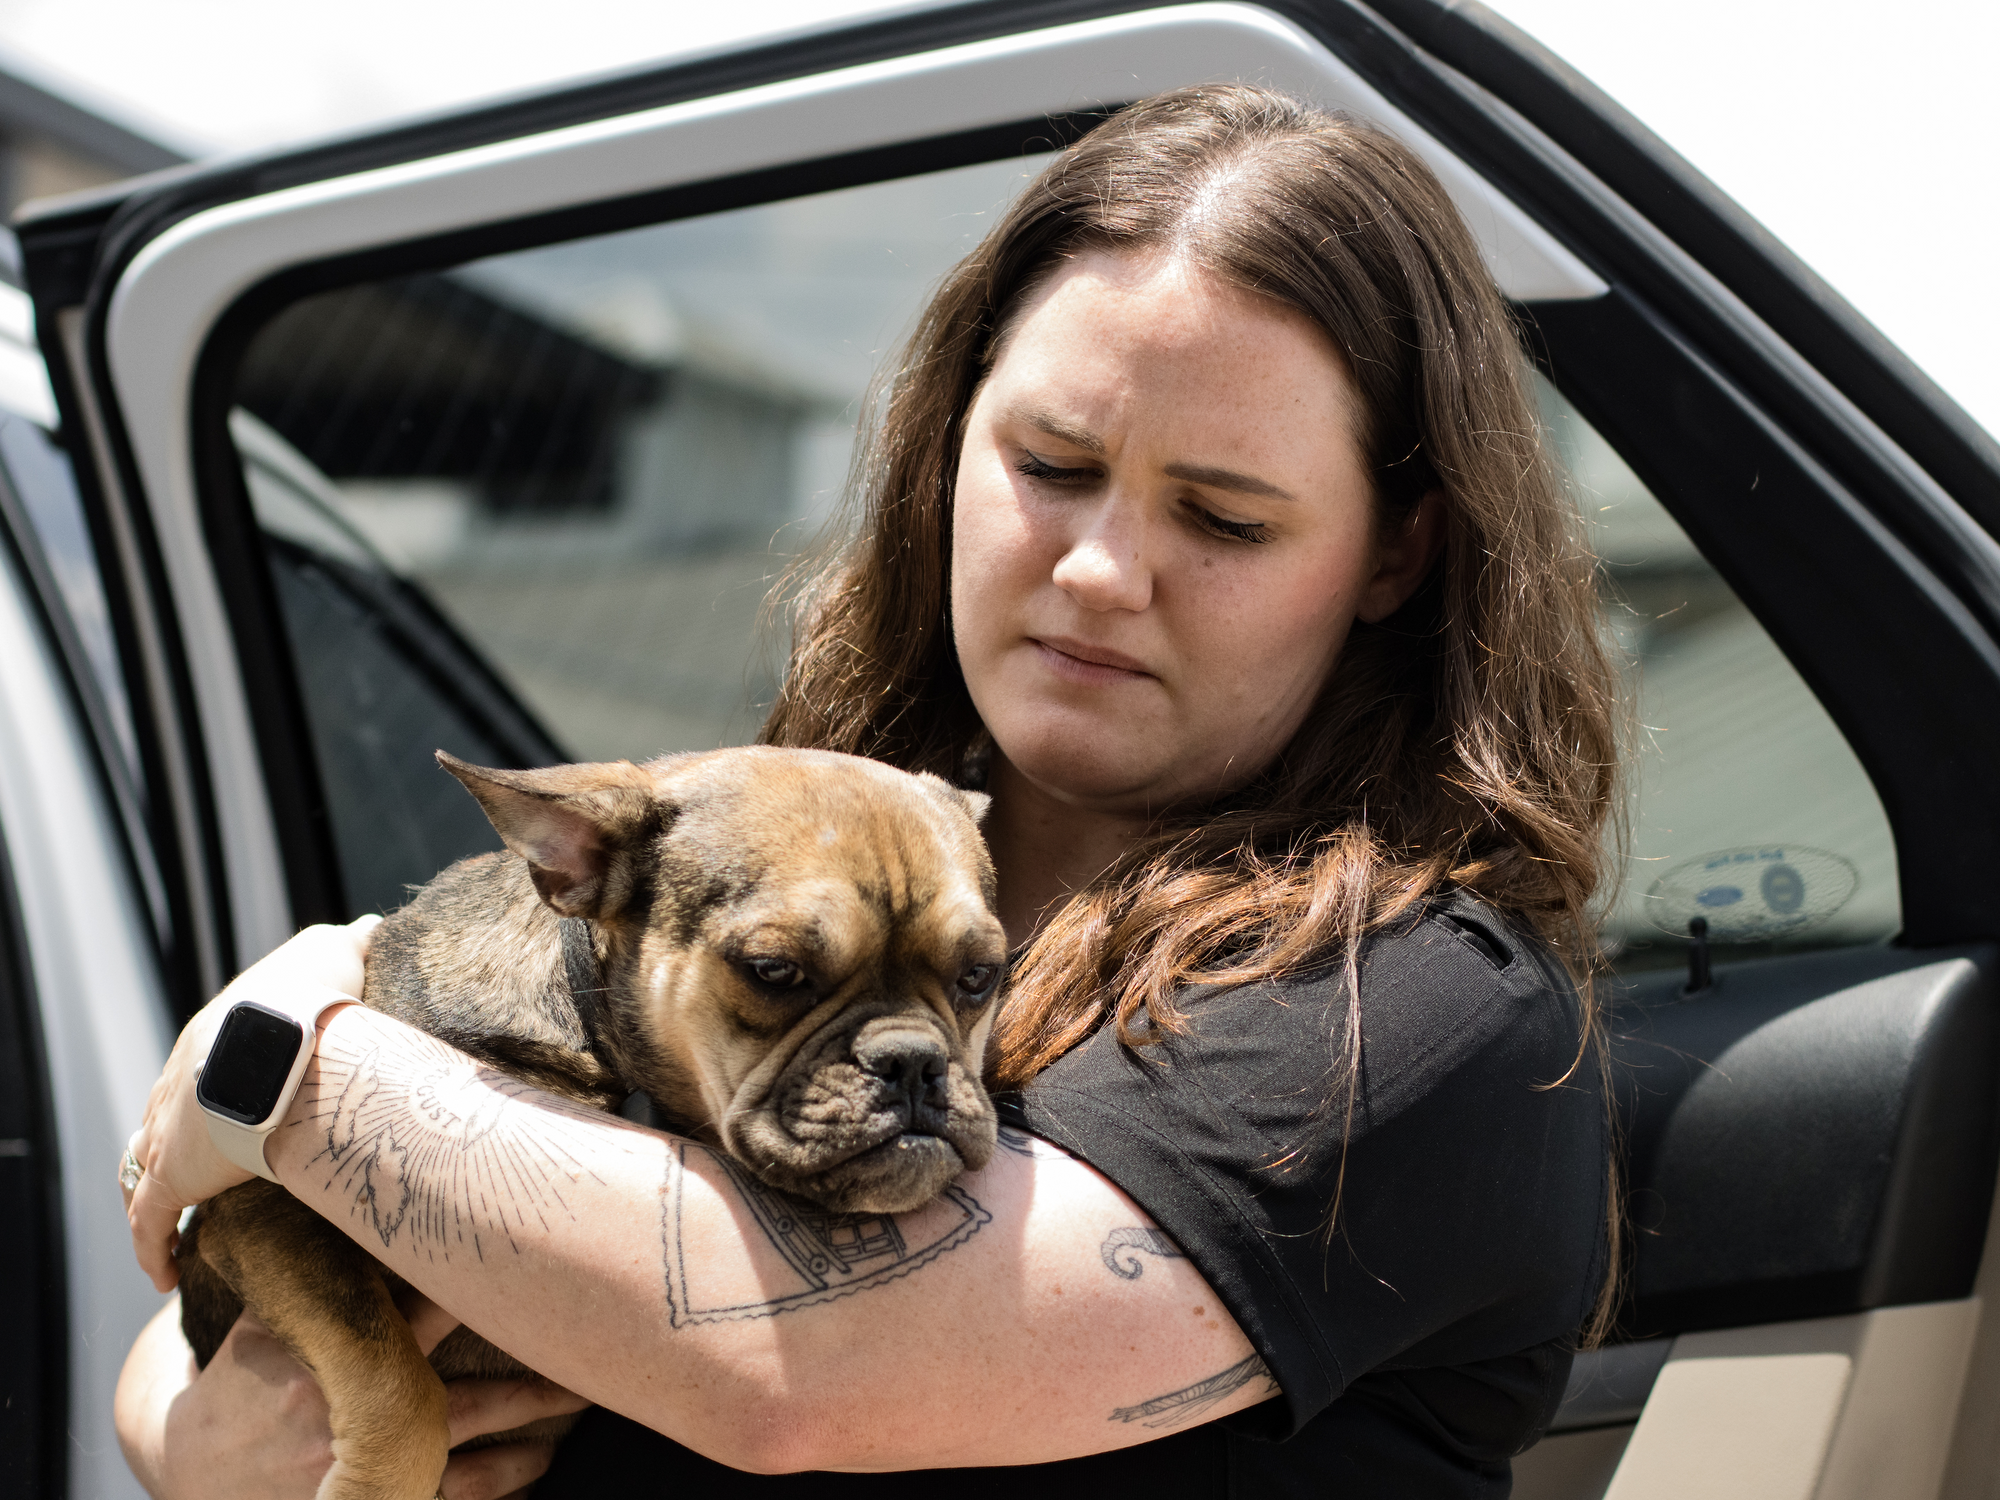 Houston SPCA rescuing French bulldog